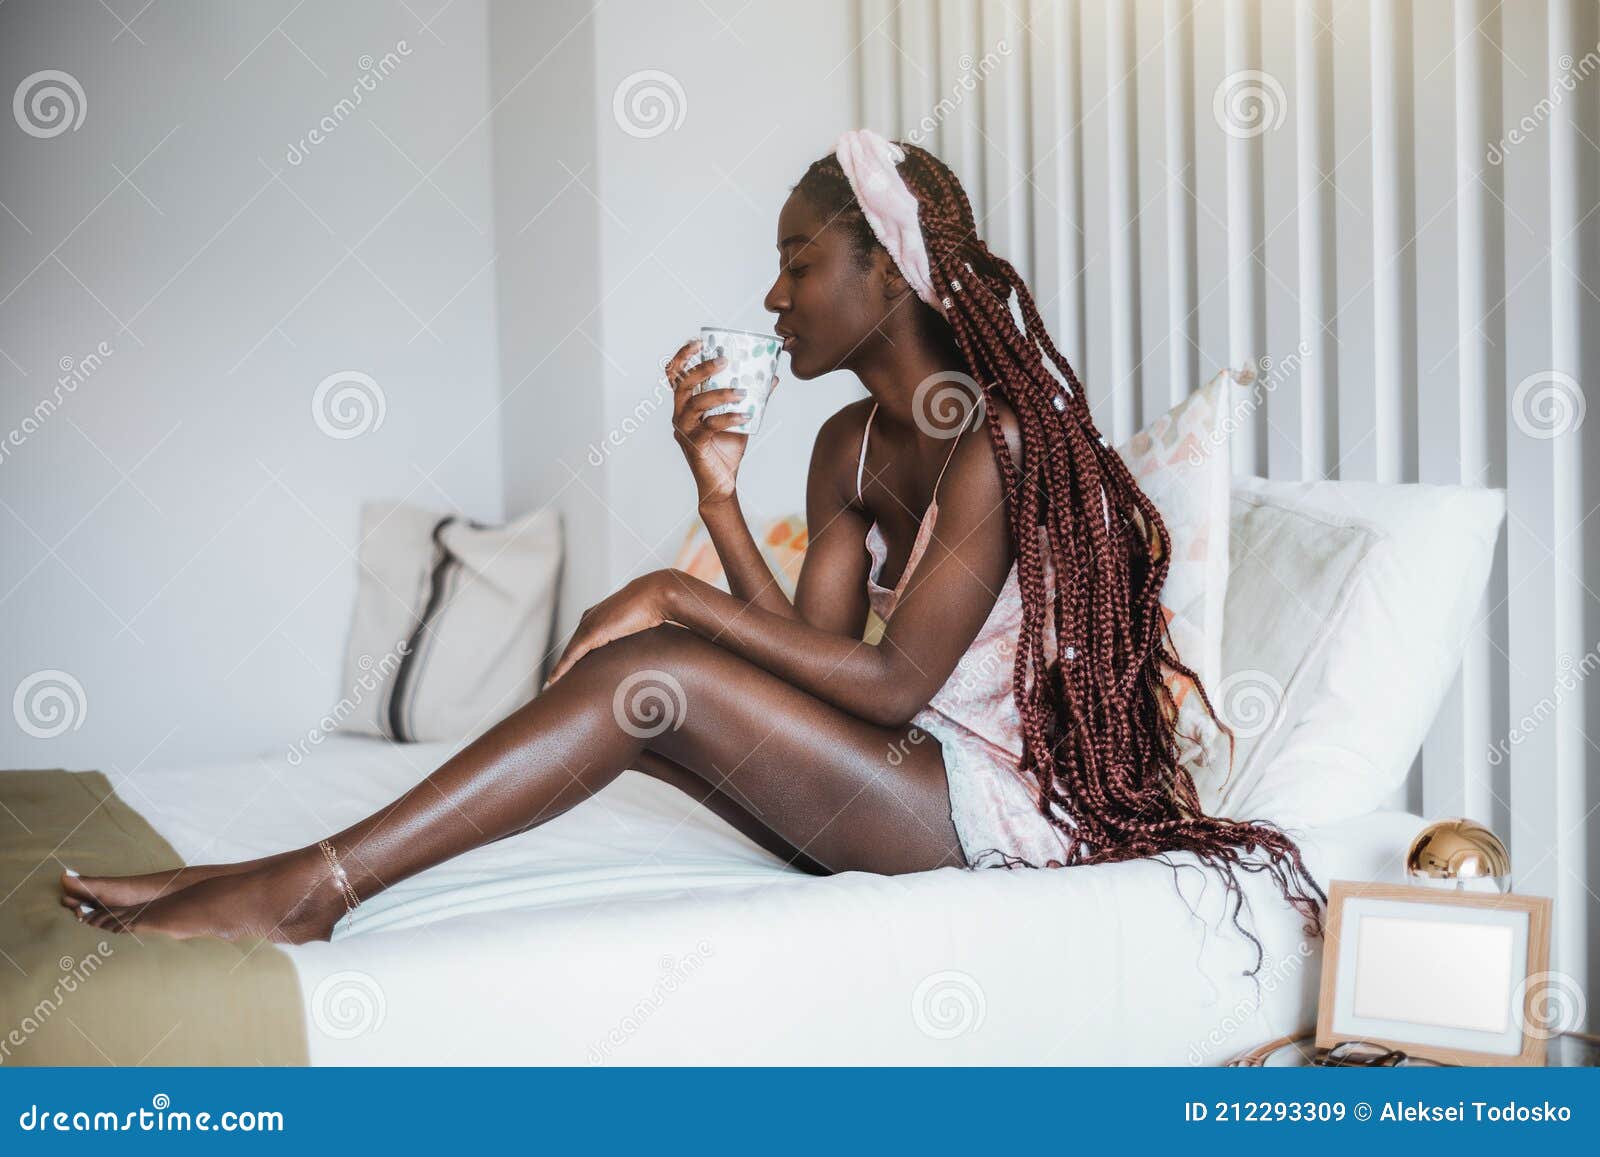 Hot Sexy Black Female